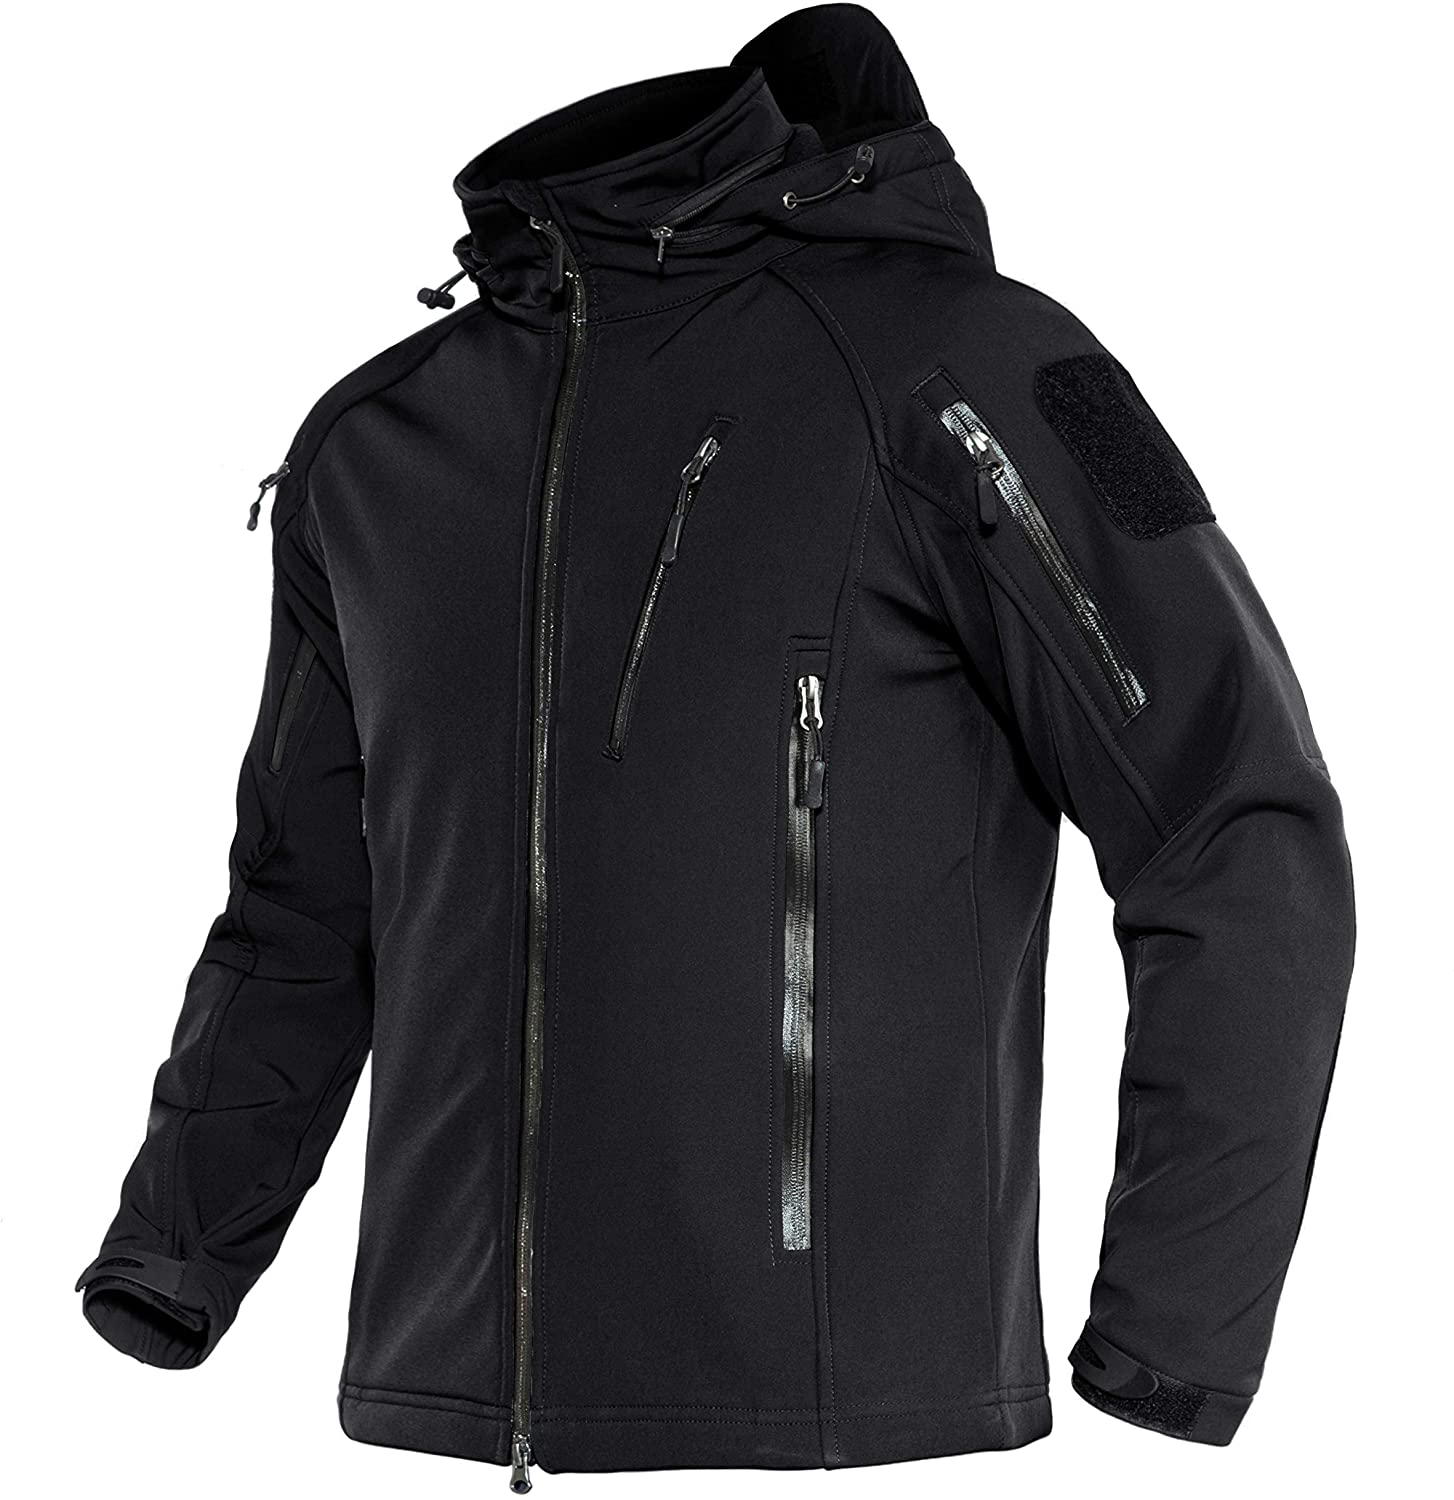 MAGNIVIT Mens Tactical Jacket 8 Pockets Winter Water Resistant Hiking Jacket Coats Softshell Military Jackets 